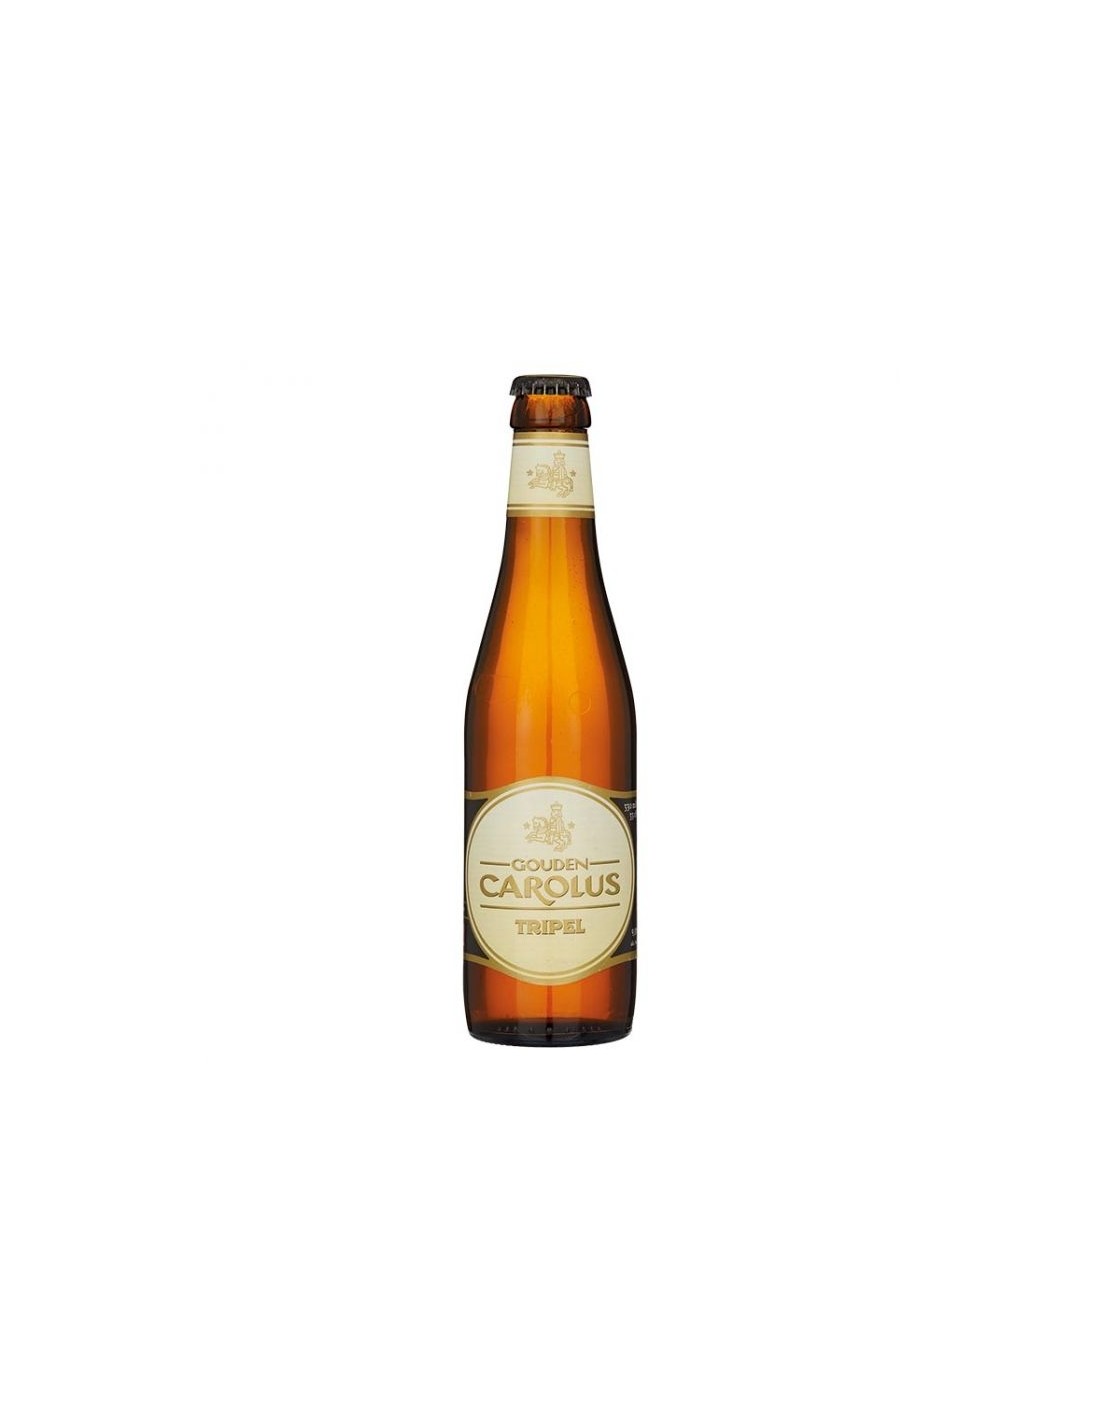 Bere blonda Gouden Carolus, 9% alc., 0.33L, Belgia alcooldiscount.ro